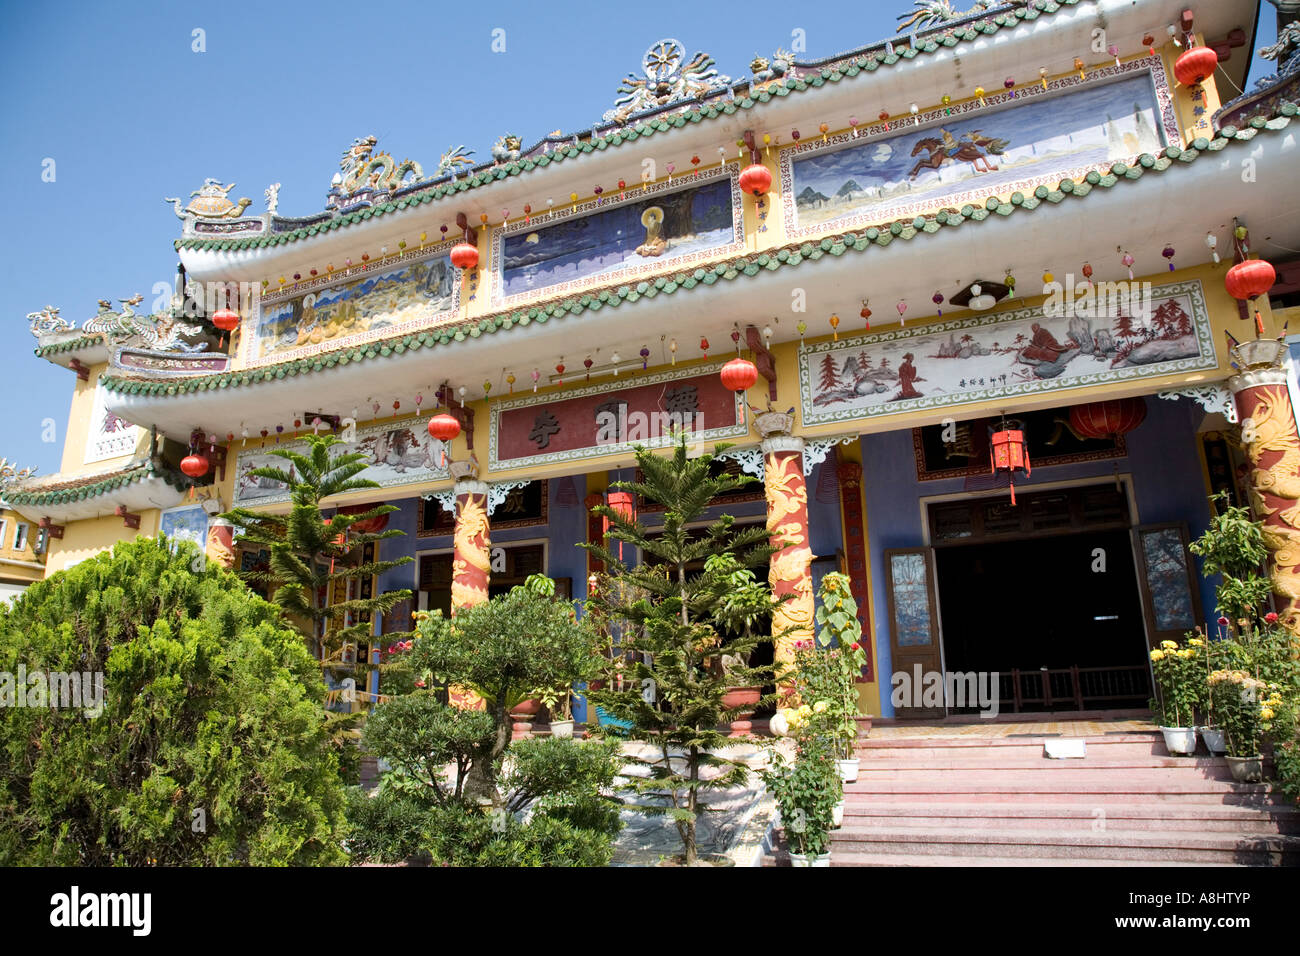 Mung Xuan Di Lac Chinese Congregation Hall, Hoi An, Vietnam Stock Photo